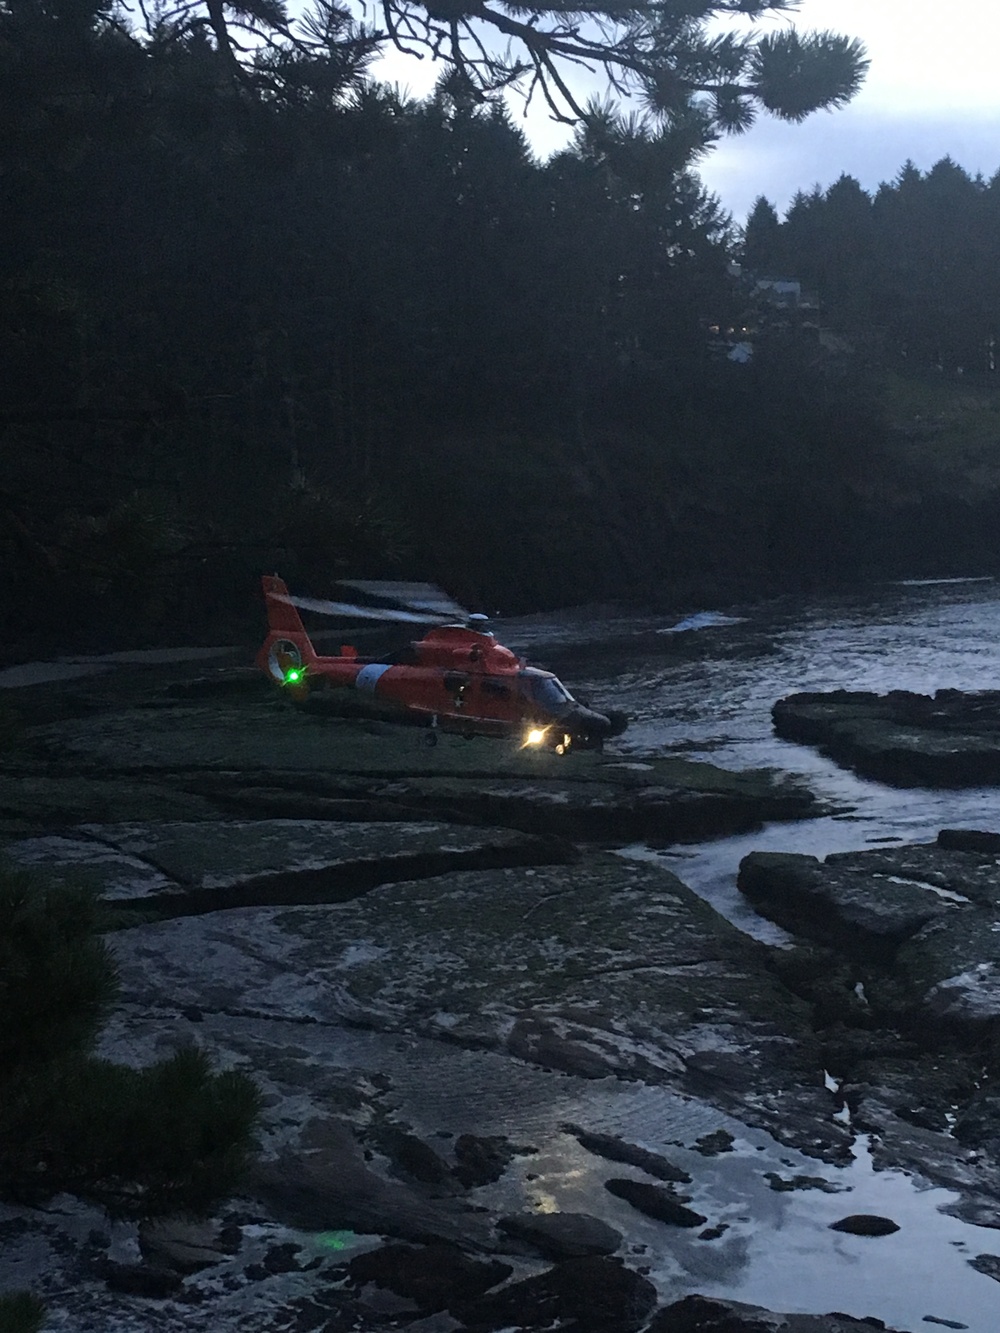 Coast Guard, local agencies rescue immobilized hiker near Newport, Ore.